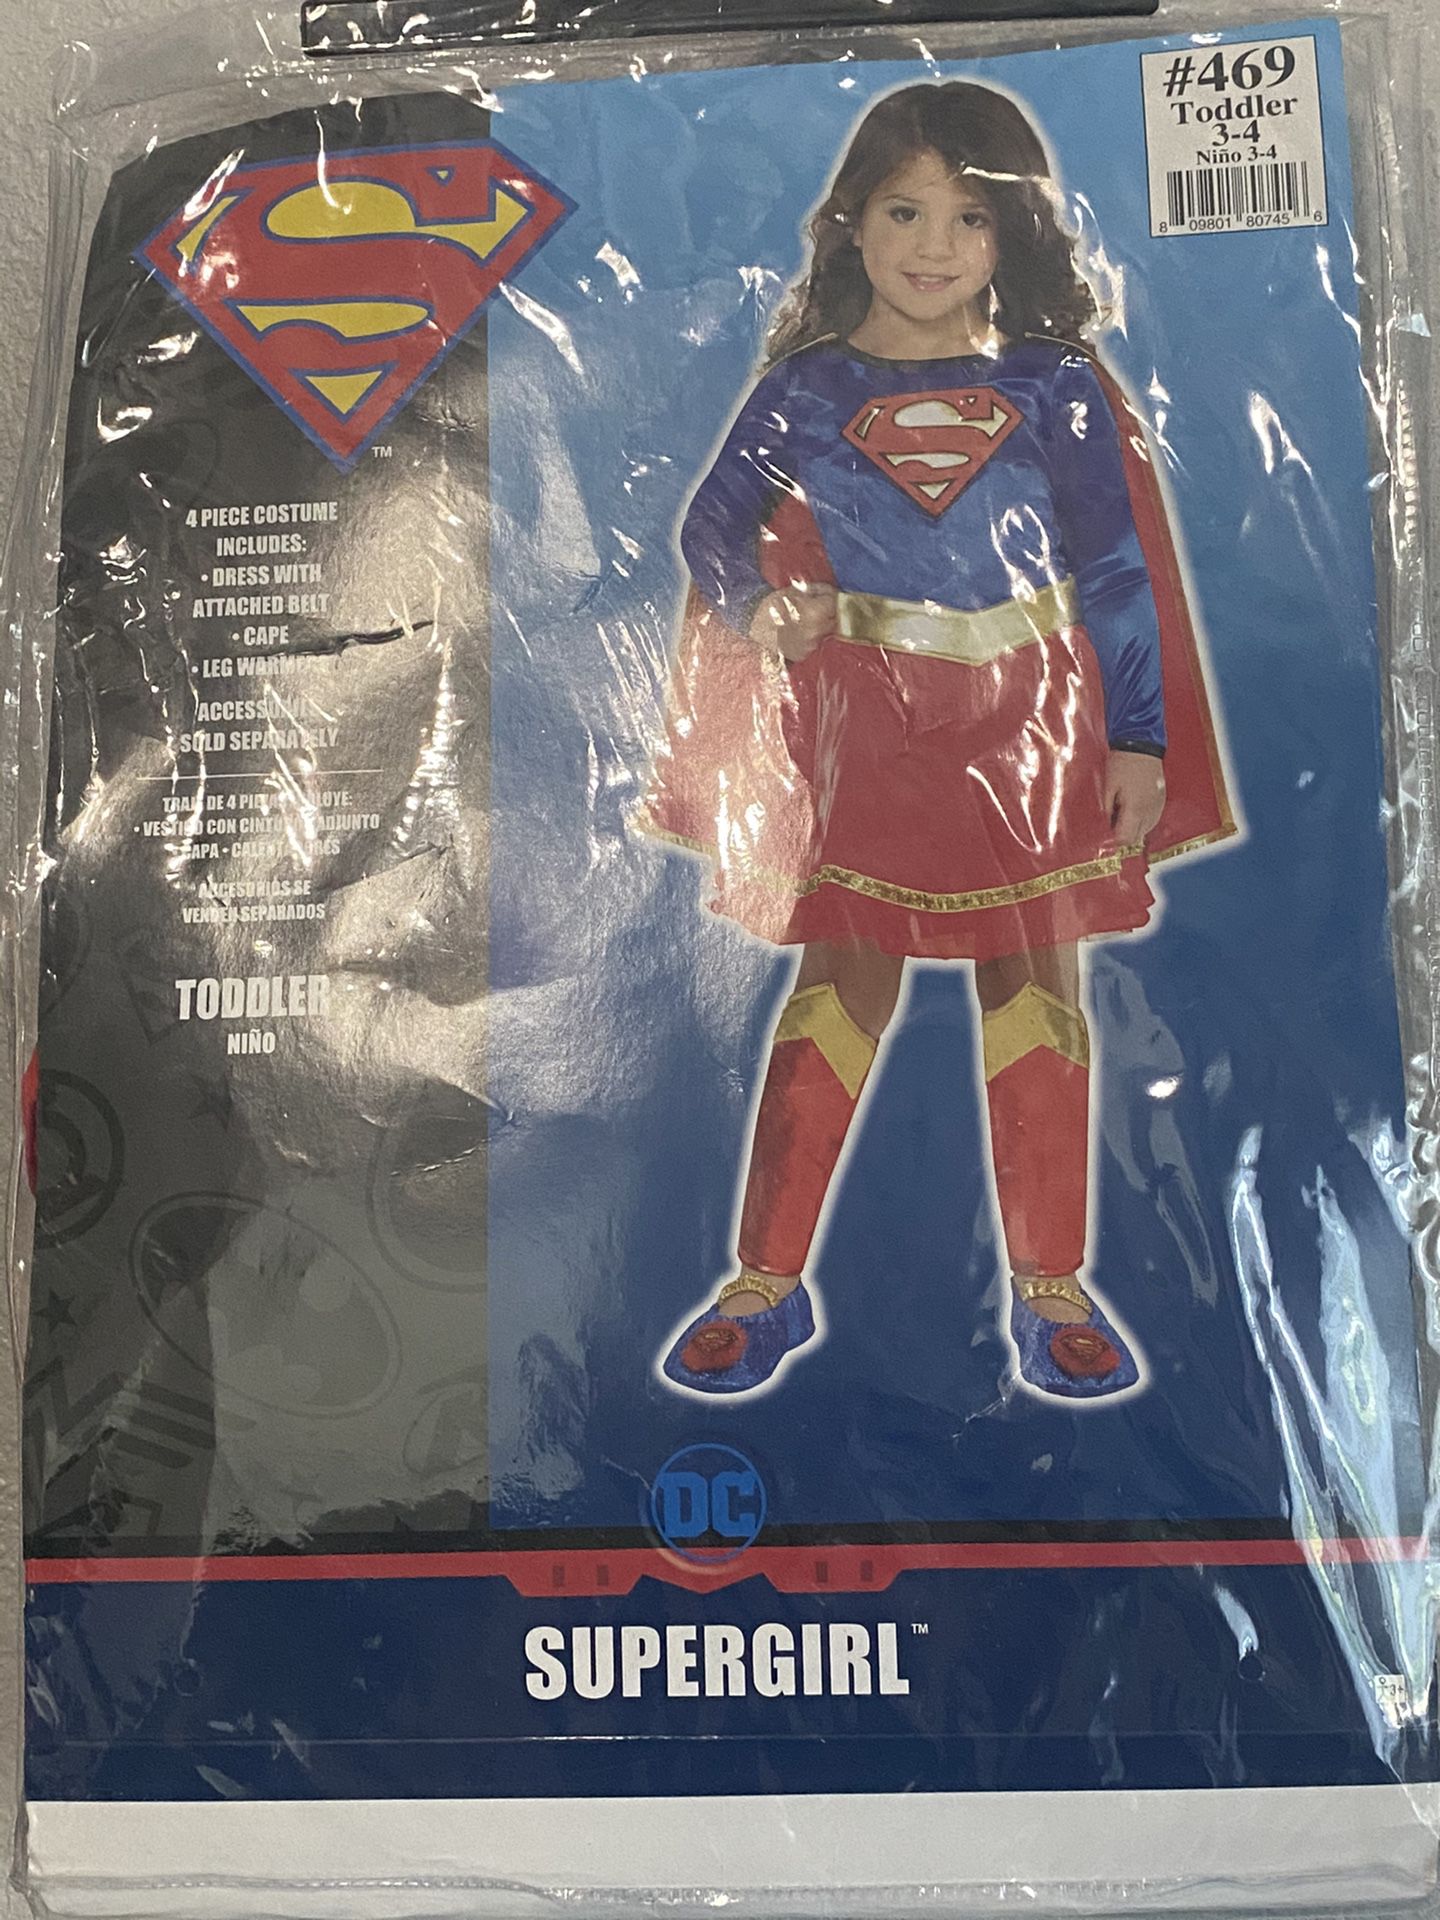 Super girl Halloween costume